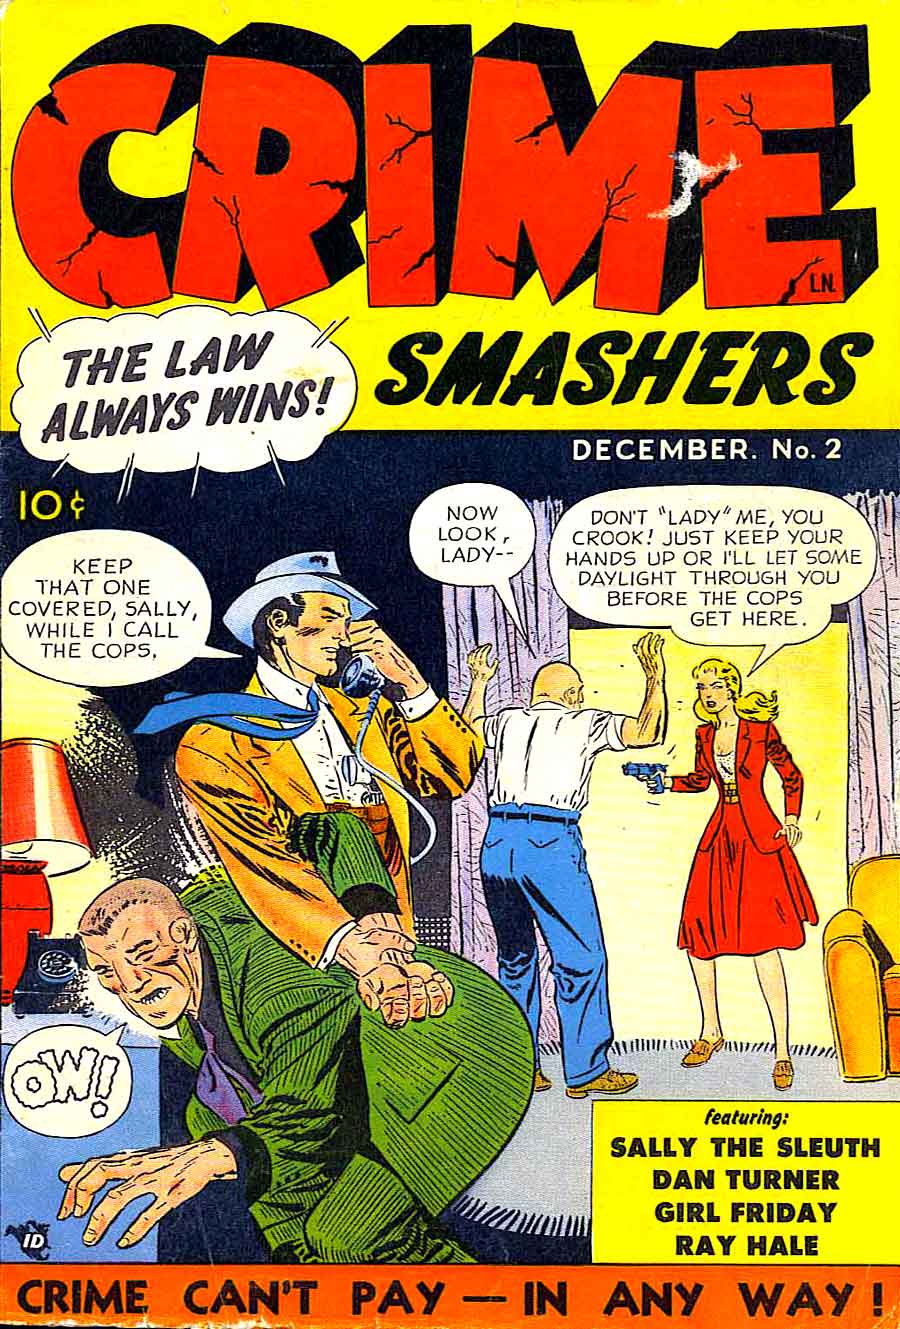 Crime Smashers #2 1950s crime comic book cover by Joe Kubert